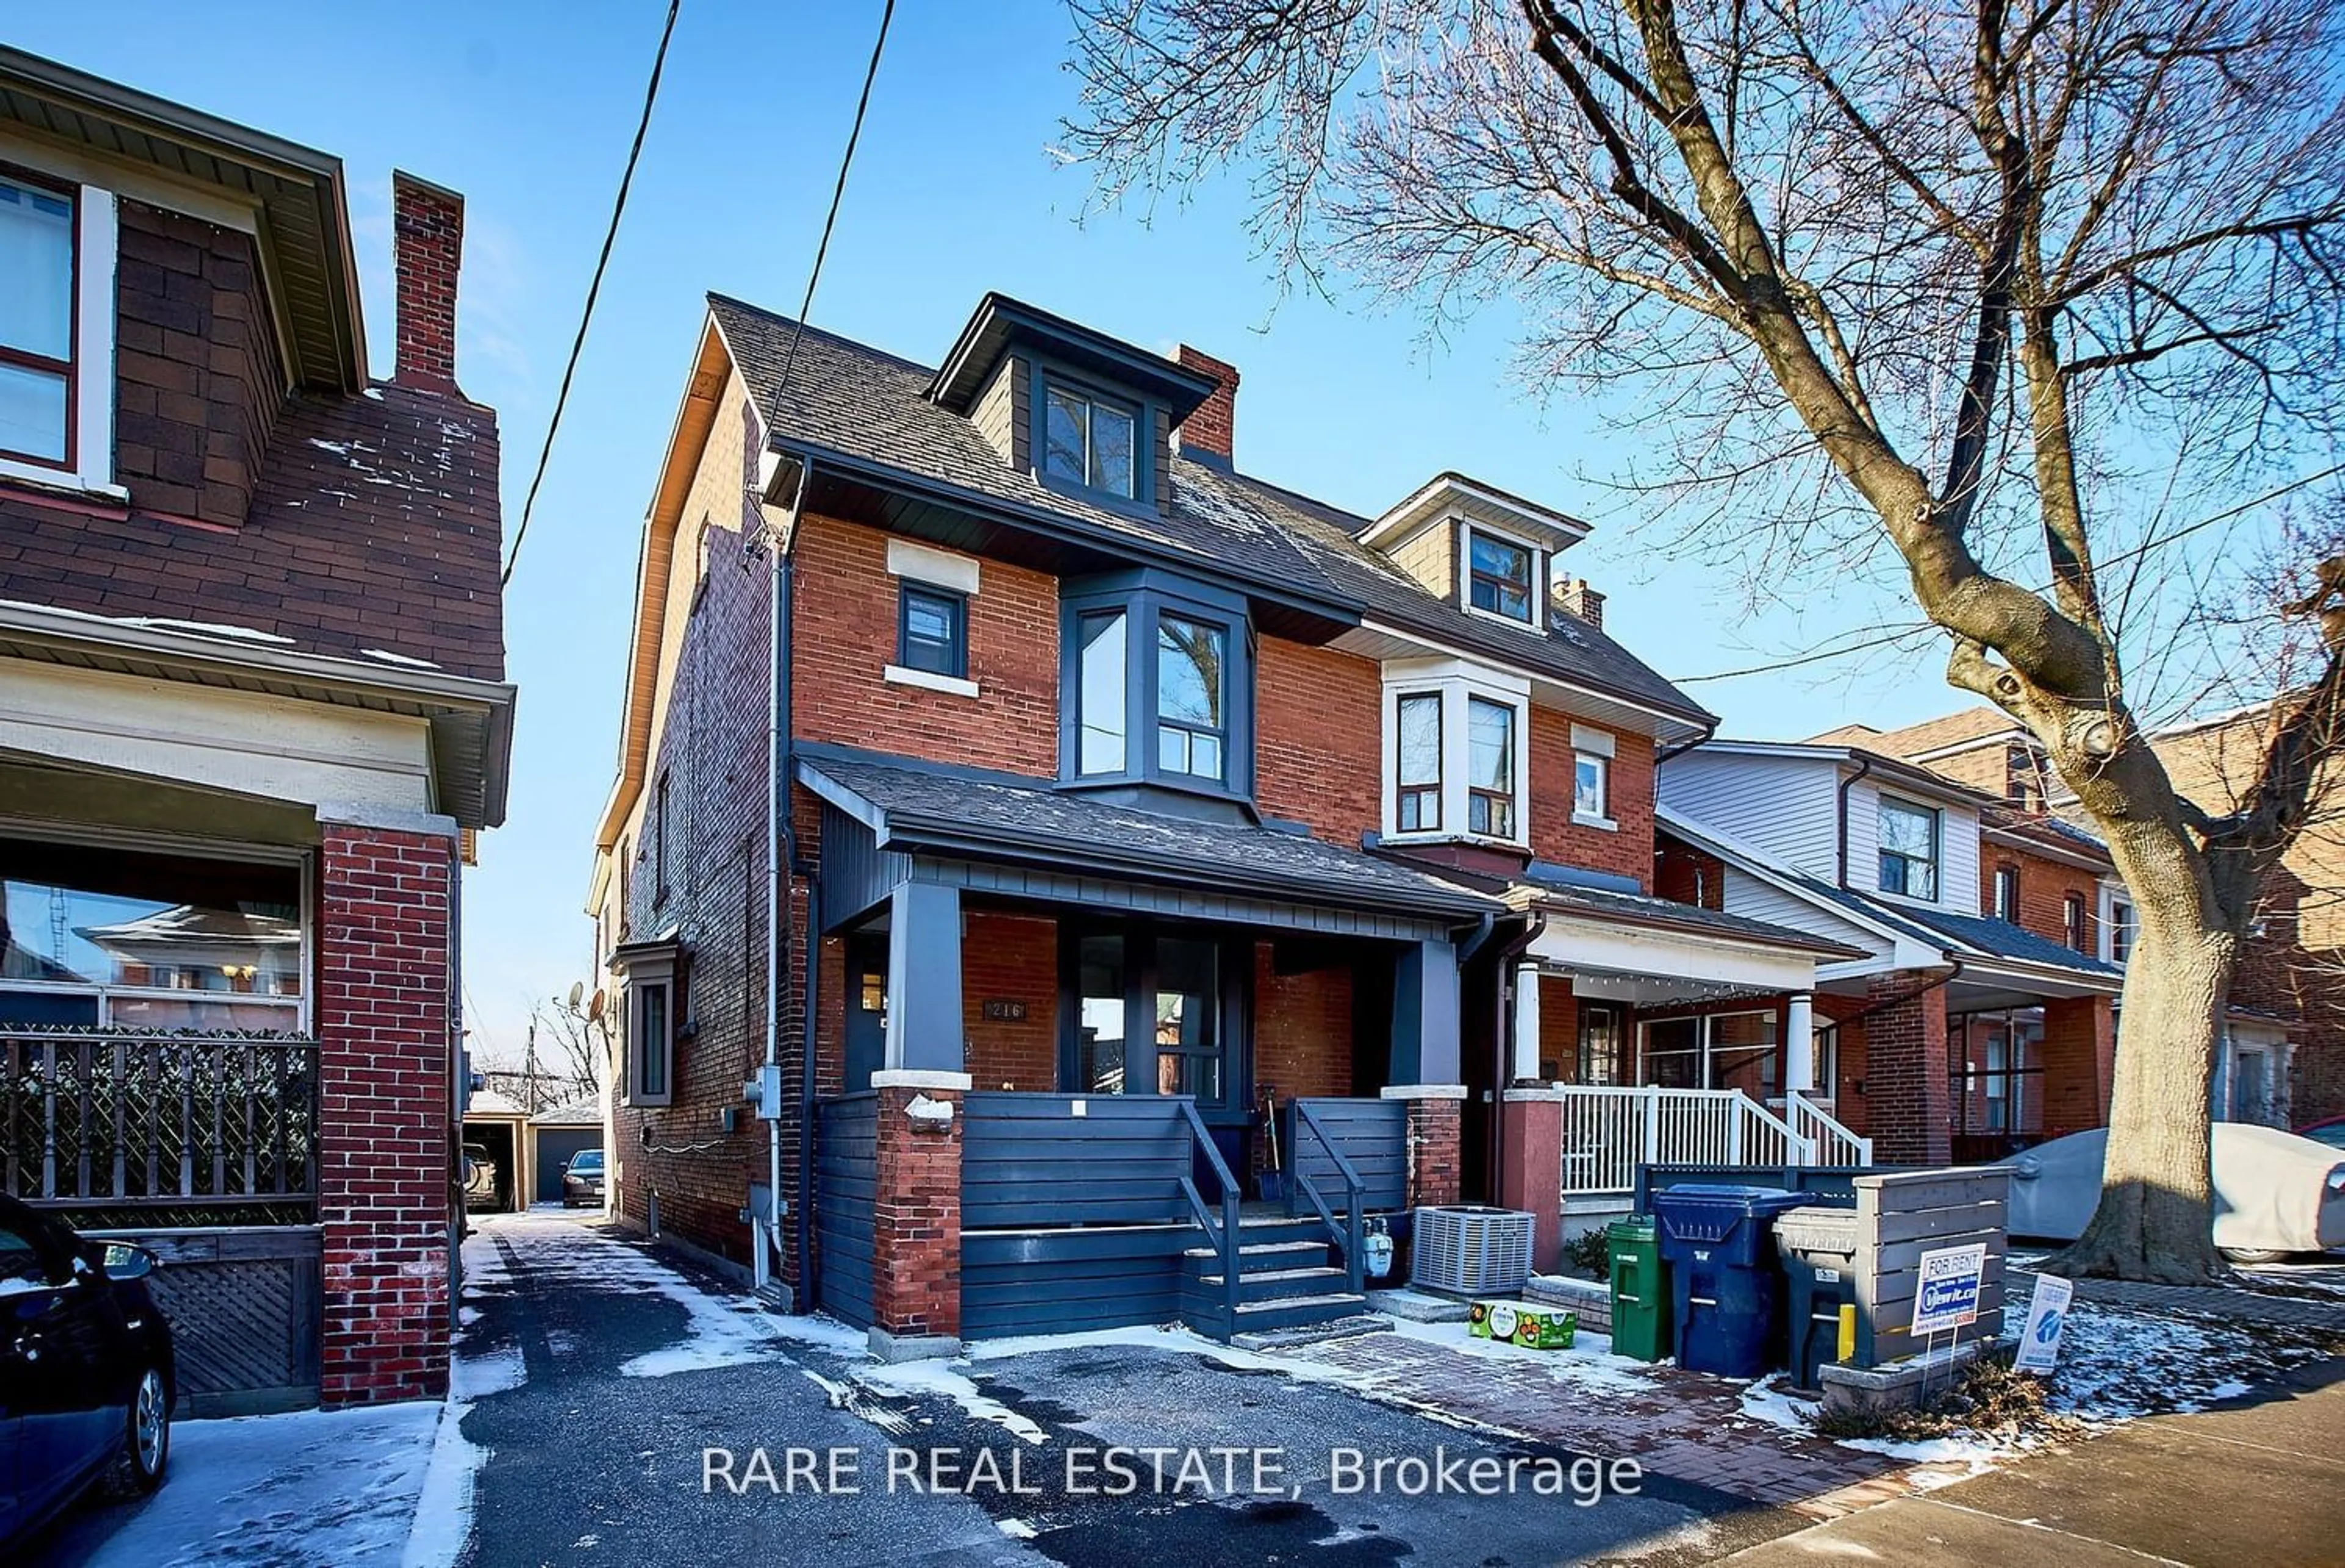 Home with brick exterior material for 216 Oakwood Ave, Toronto Ontario M6E 2V4